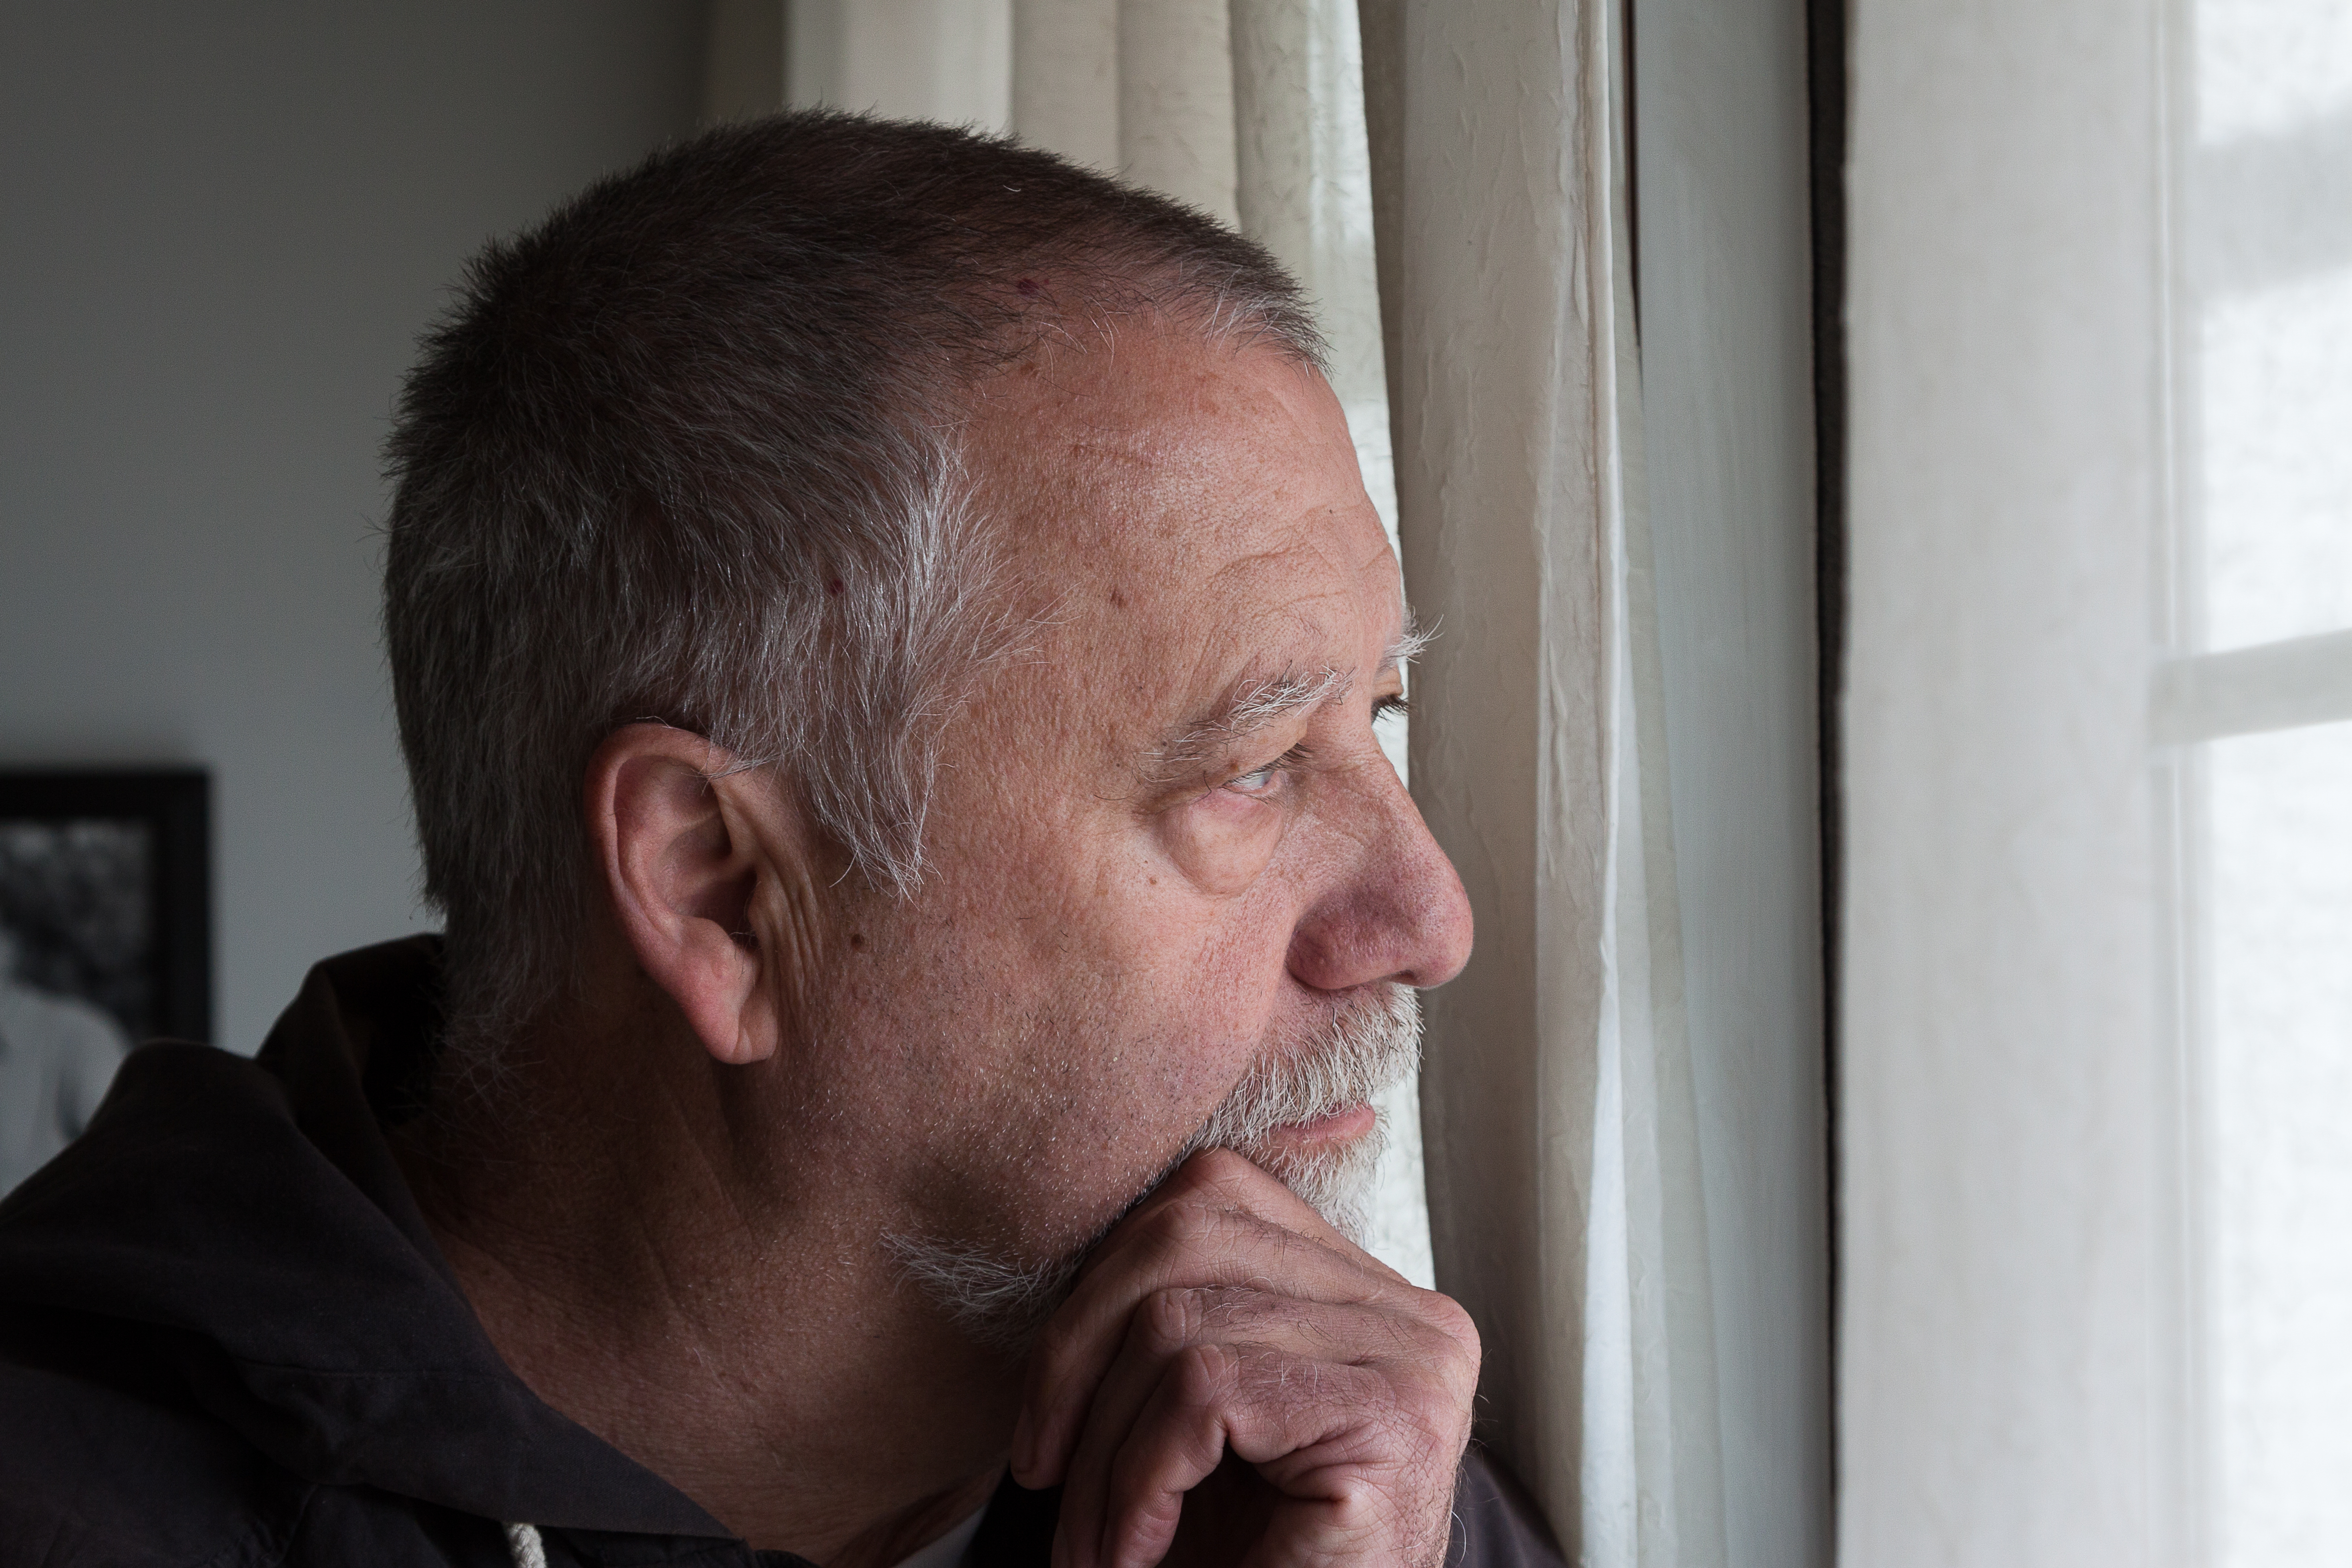 Sad man is staying near the window | Source: Shutterstock.com